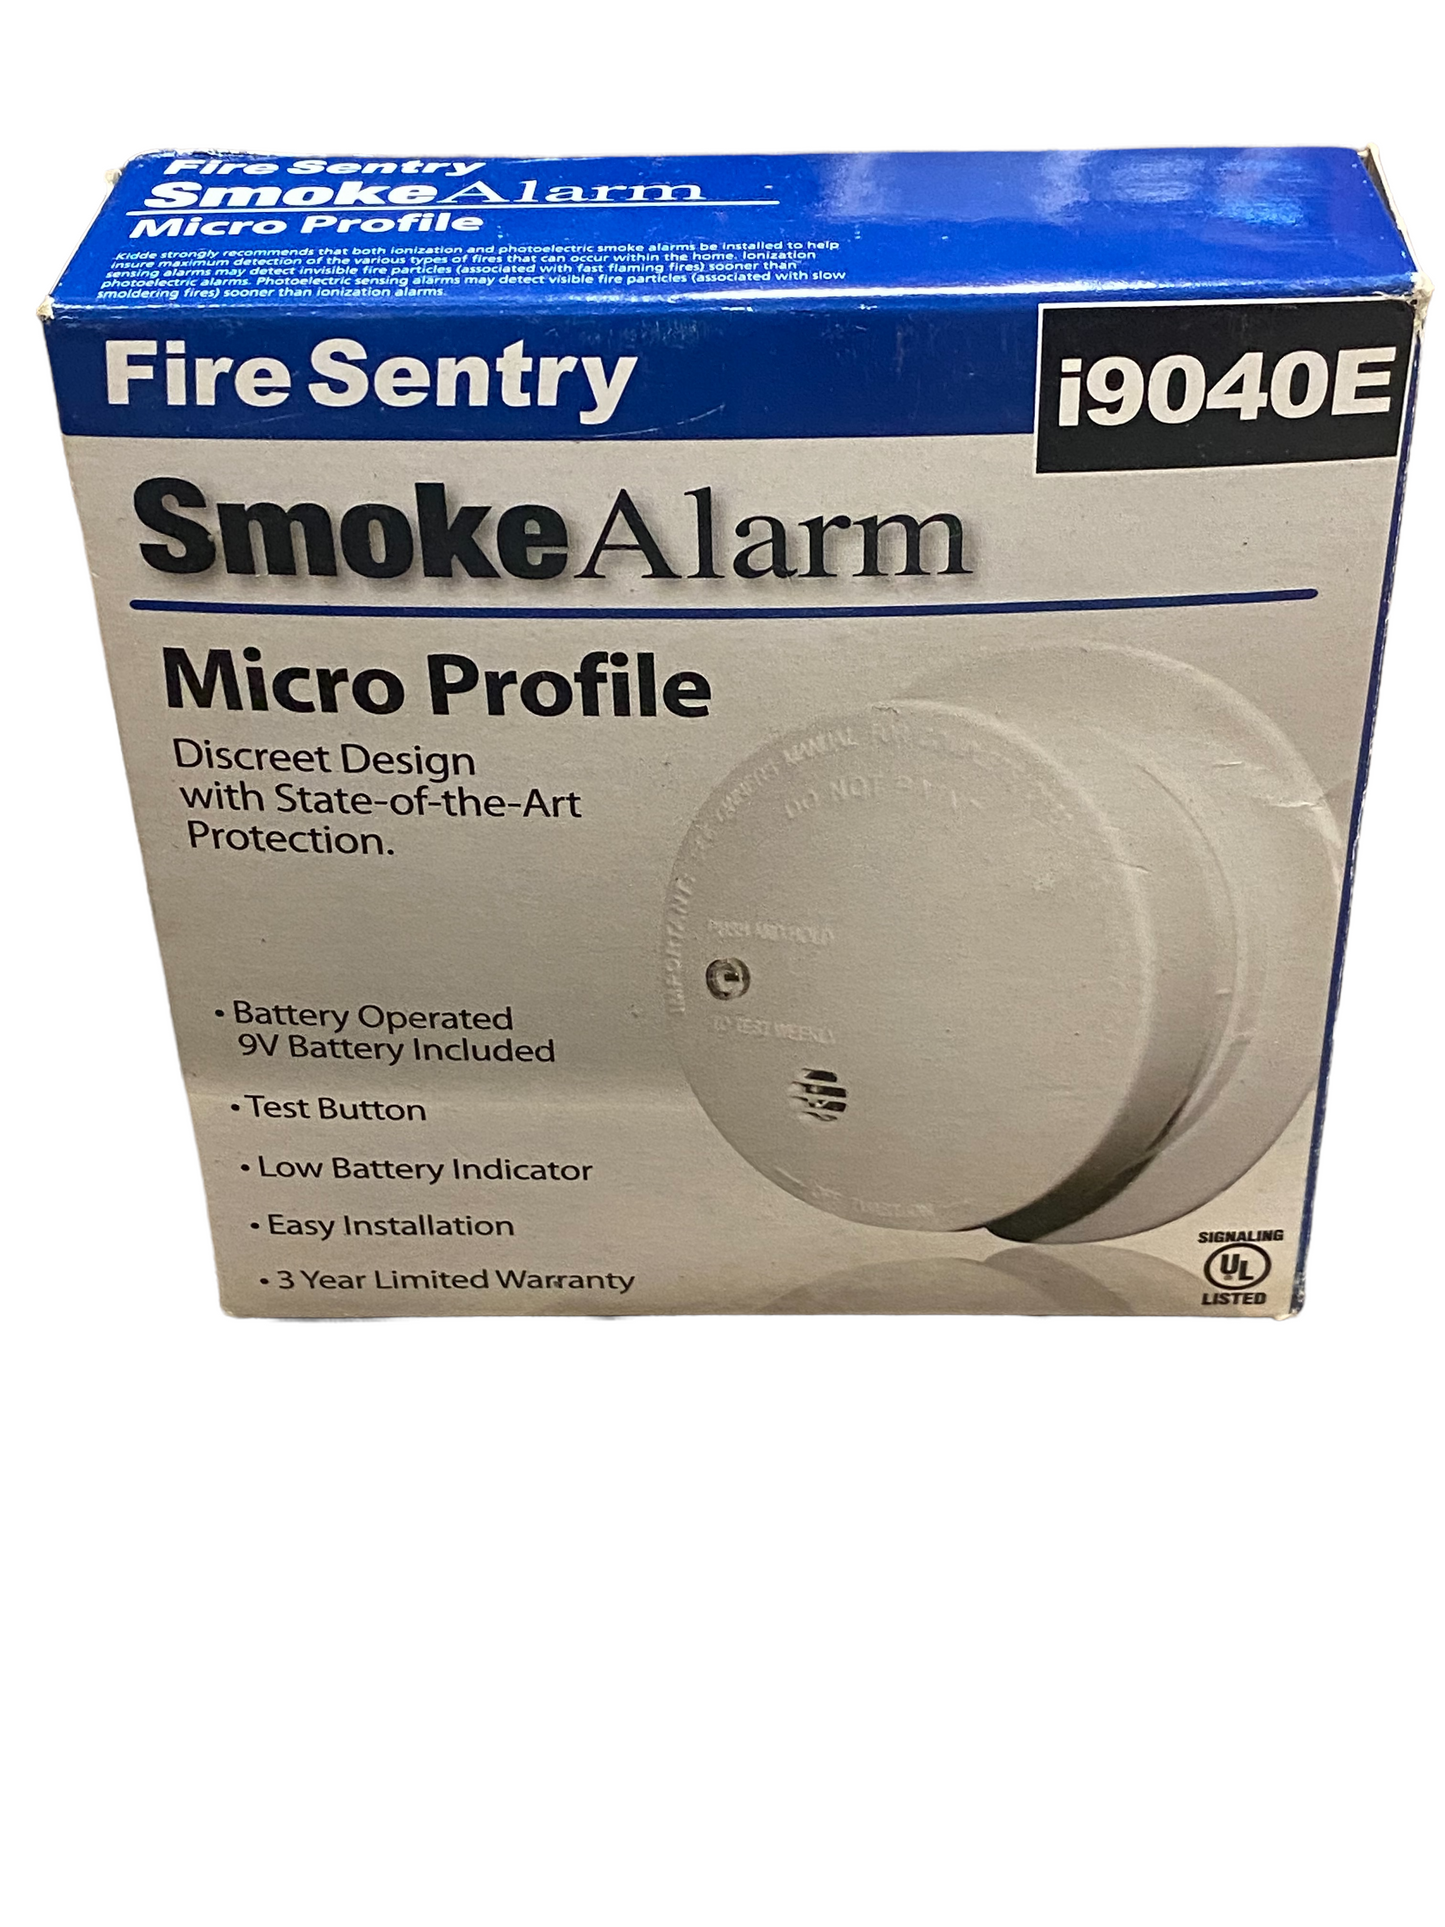 Fire SENTRY Smoke Alarm Micro Profile i9040E Brand-New with 9V Battery KIDDE